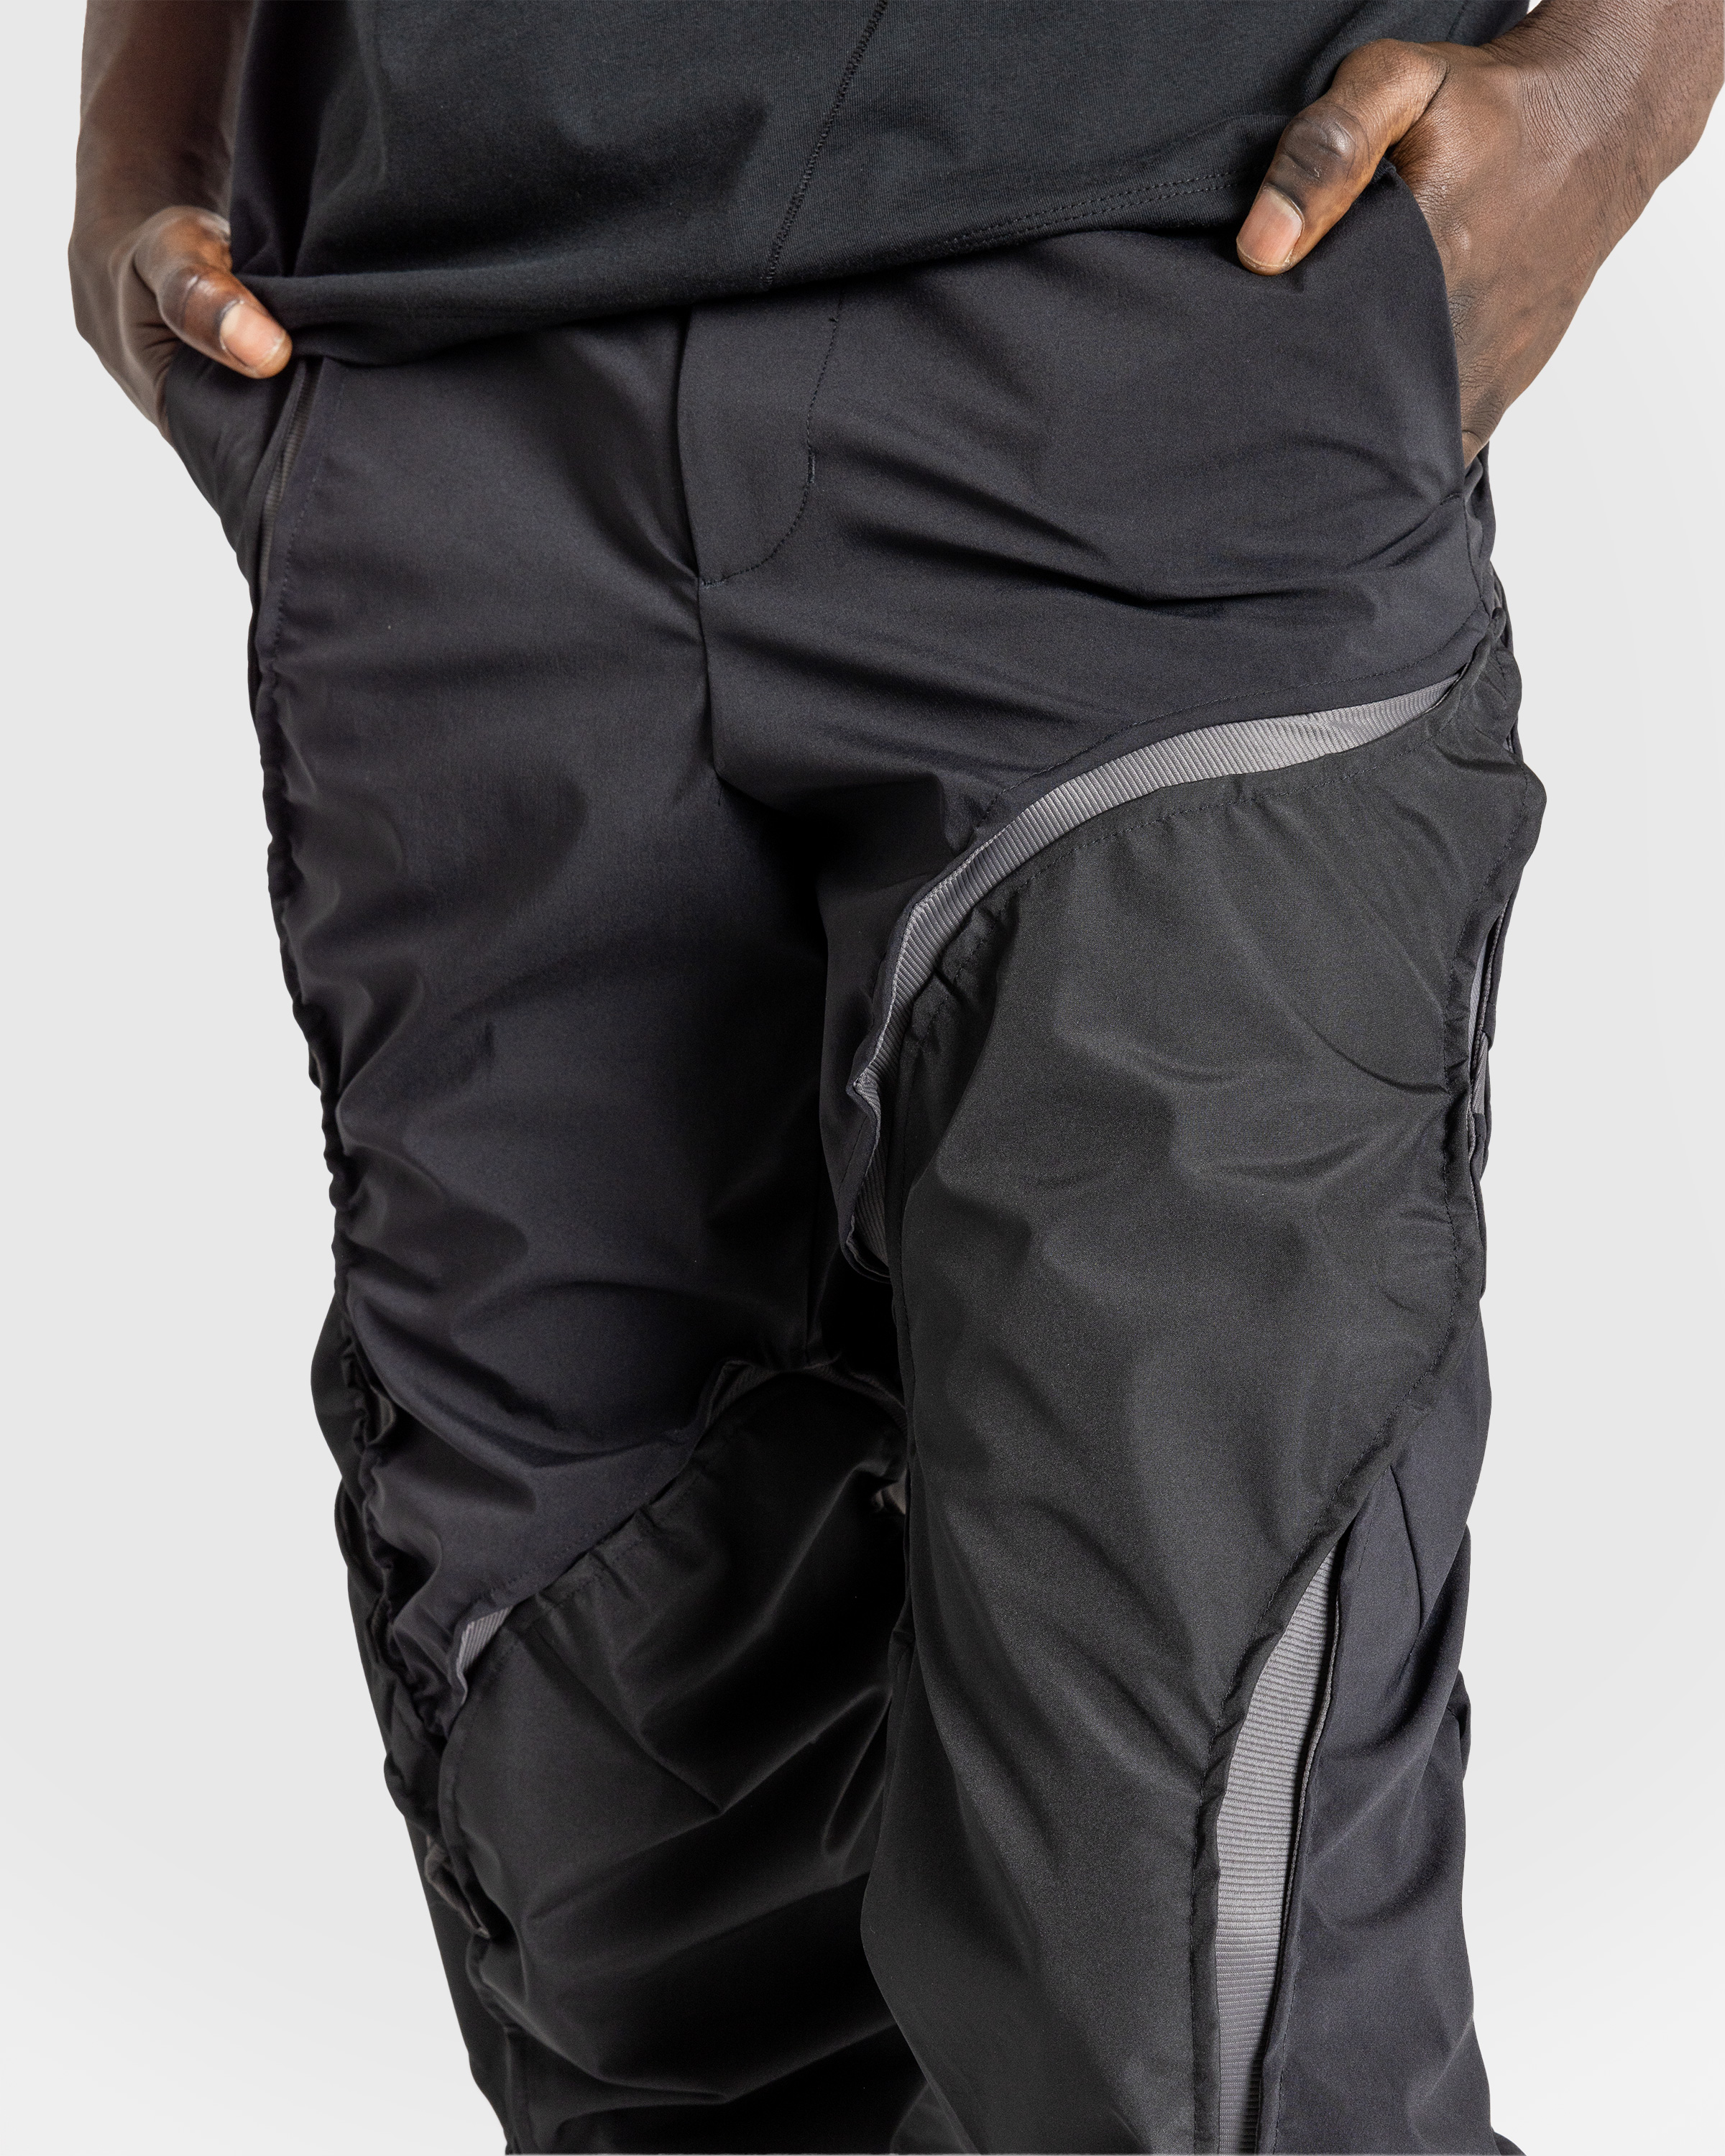 Post Archive Faction (PAF) – 6.0 Technical Pants Left Black - Trousers - Black - Image 5